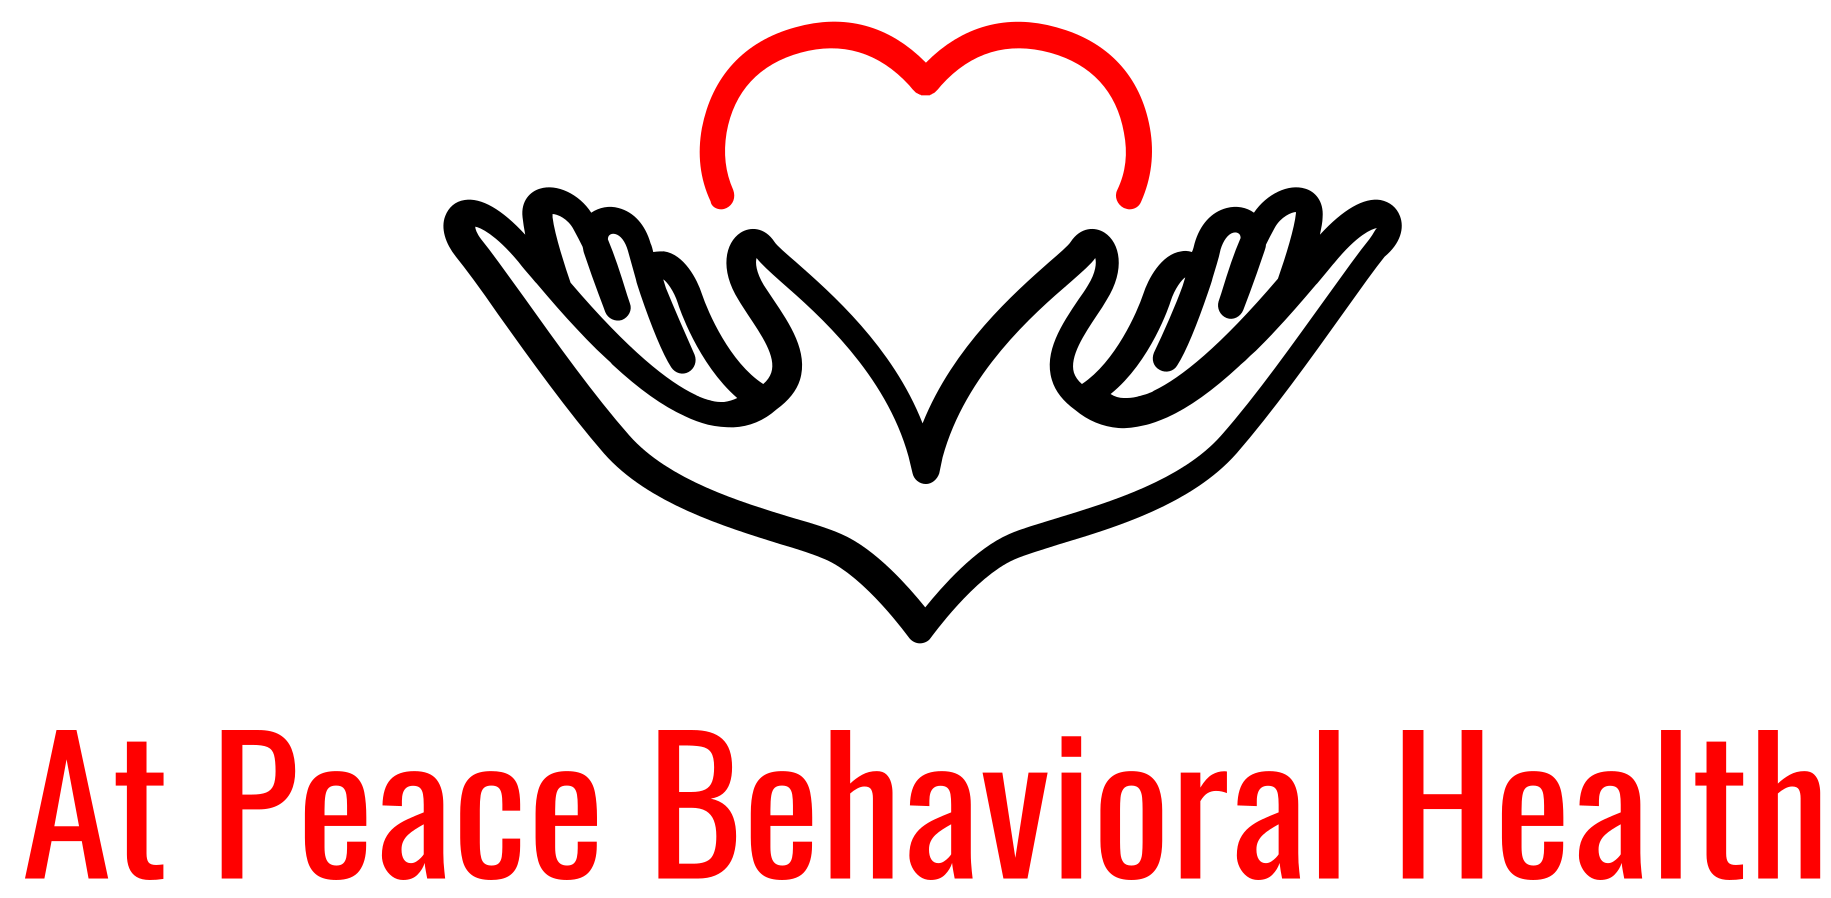 At Peace Behavioral Health